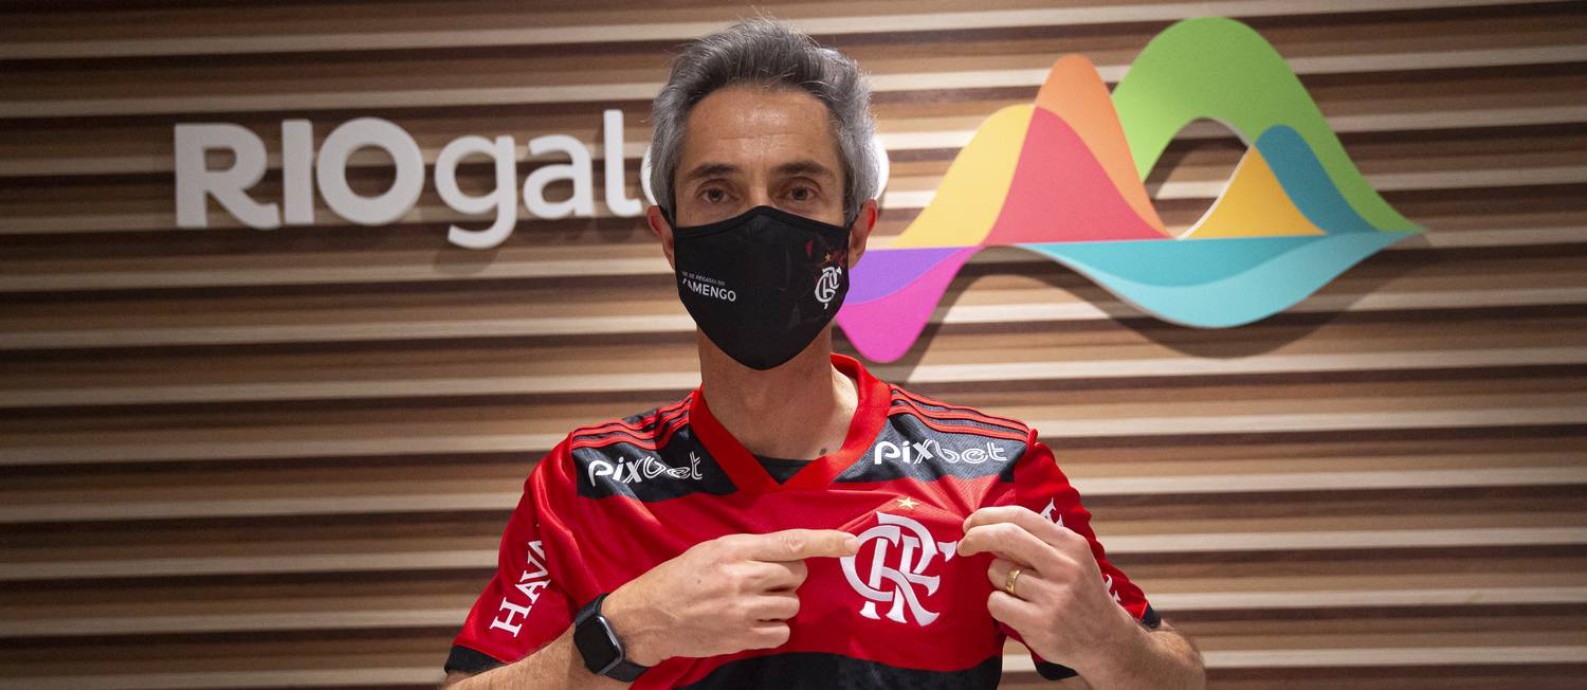 Paulo Sousa vestiu a camisa do Flamengo Foto: Alexandre Vidal / Flamengo